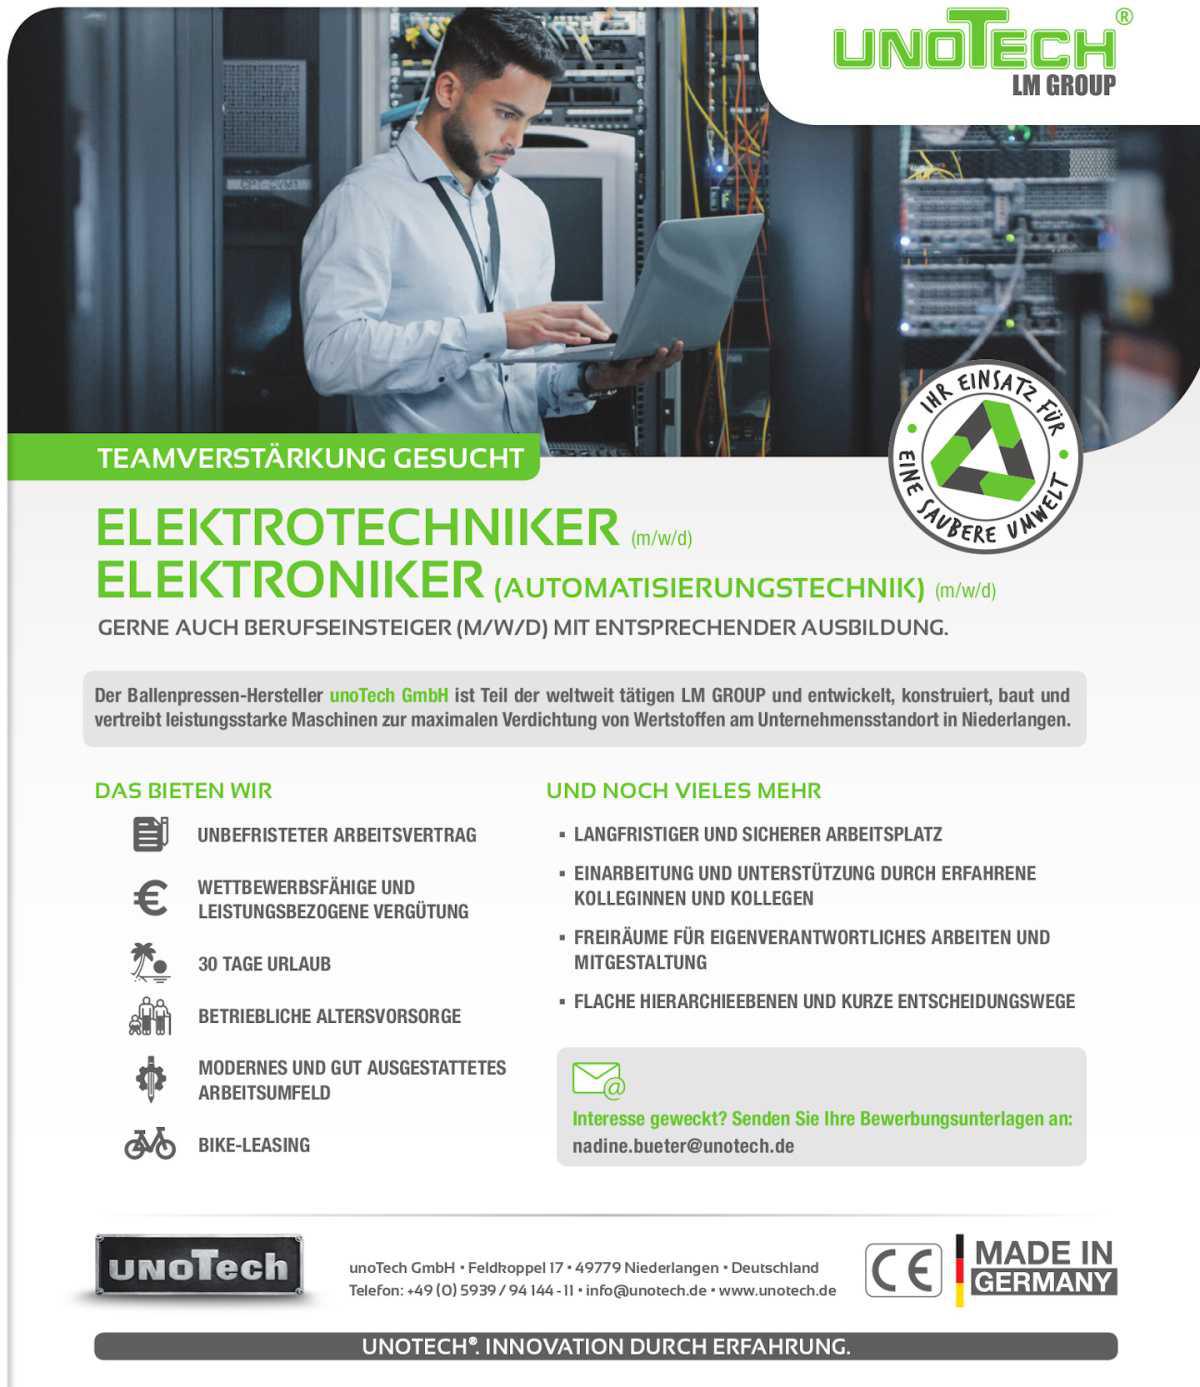 unoTech GmbH sucht Elektrotechniker / Elektroniker Automatisierungstechnik (m/w/d)